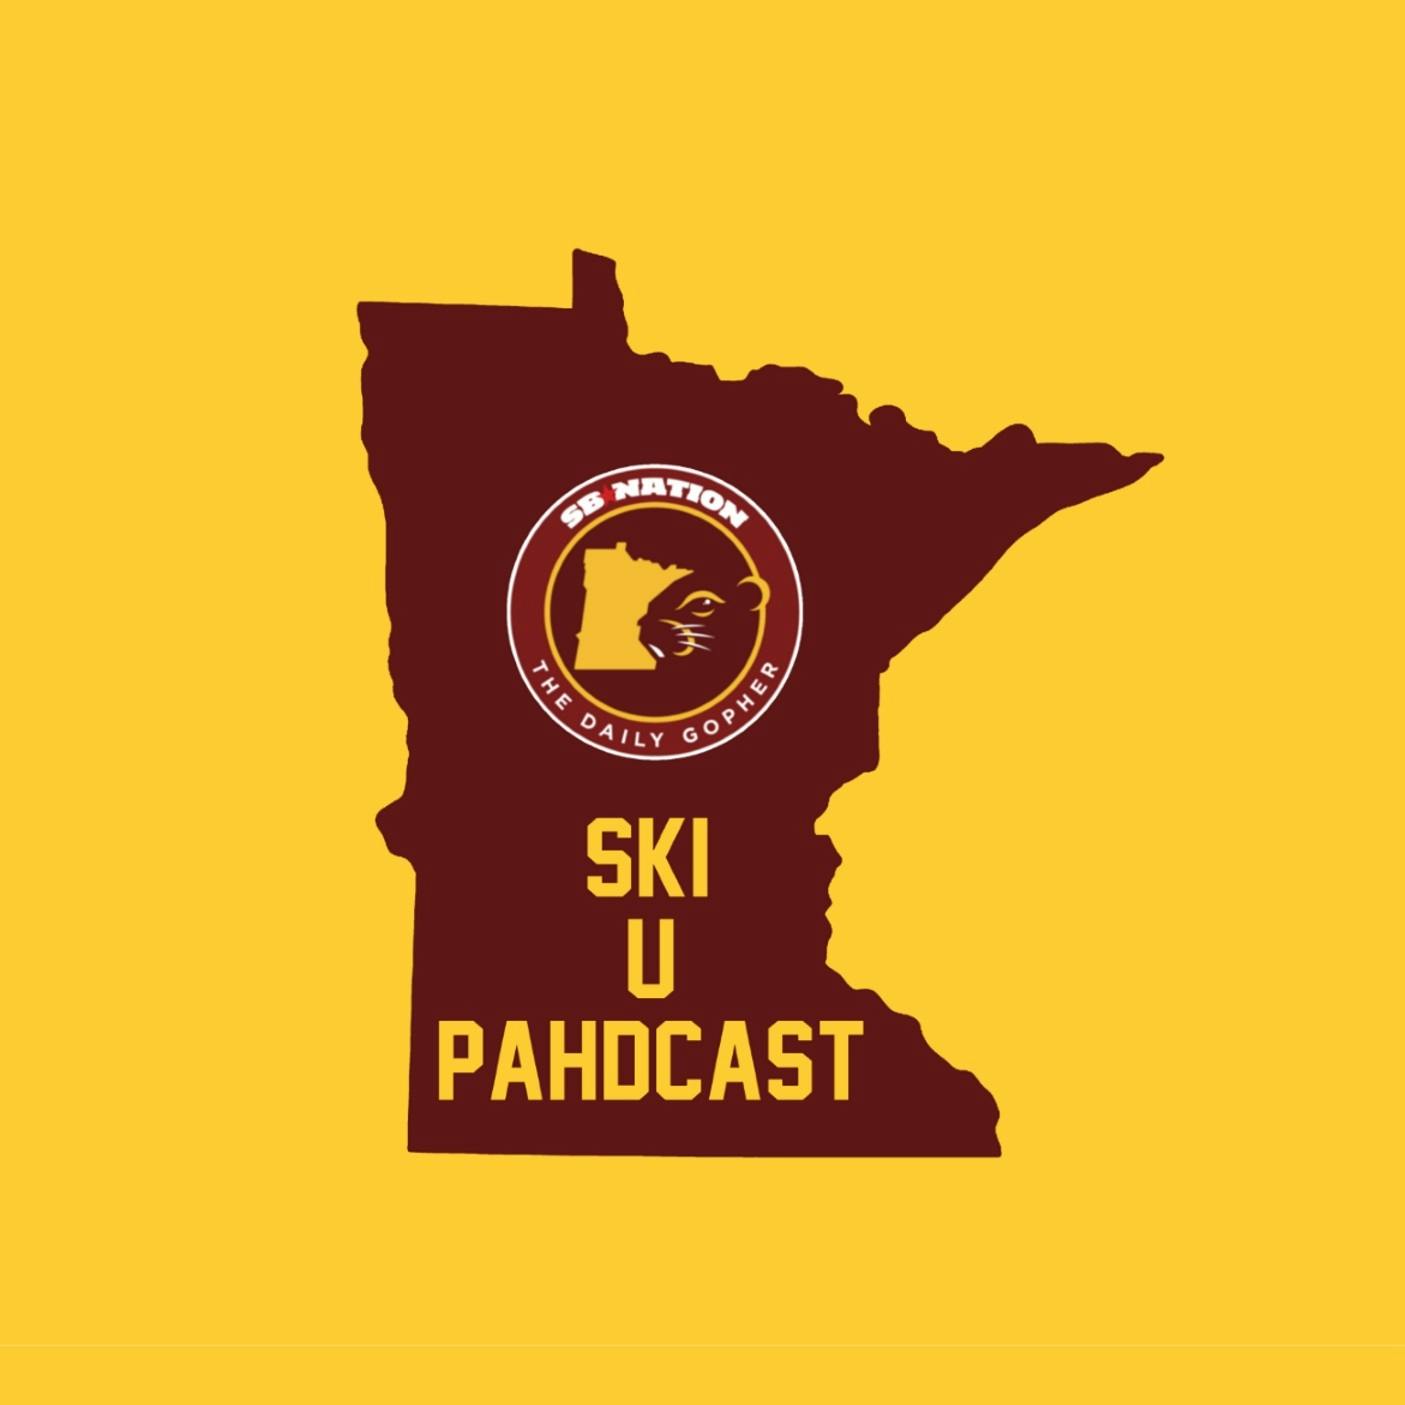 Ski-U-Pahdcast - Ep 6.17: They murdered the Pahdcast